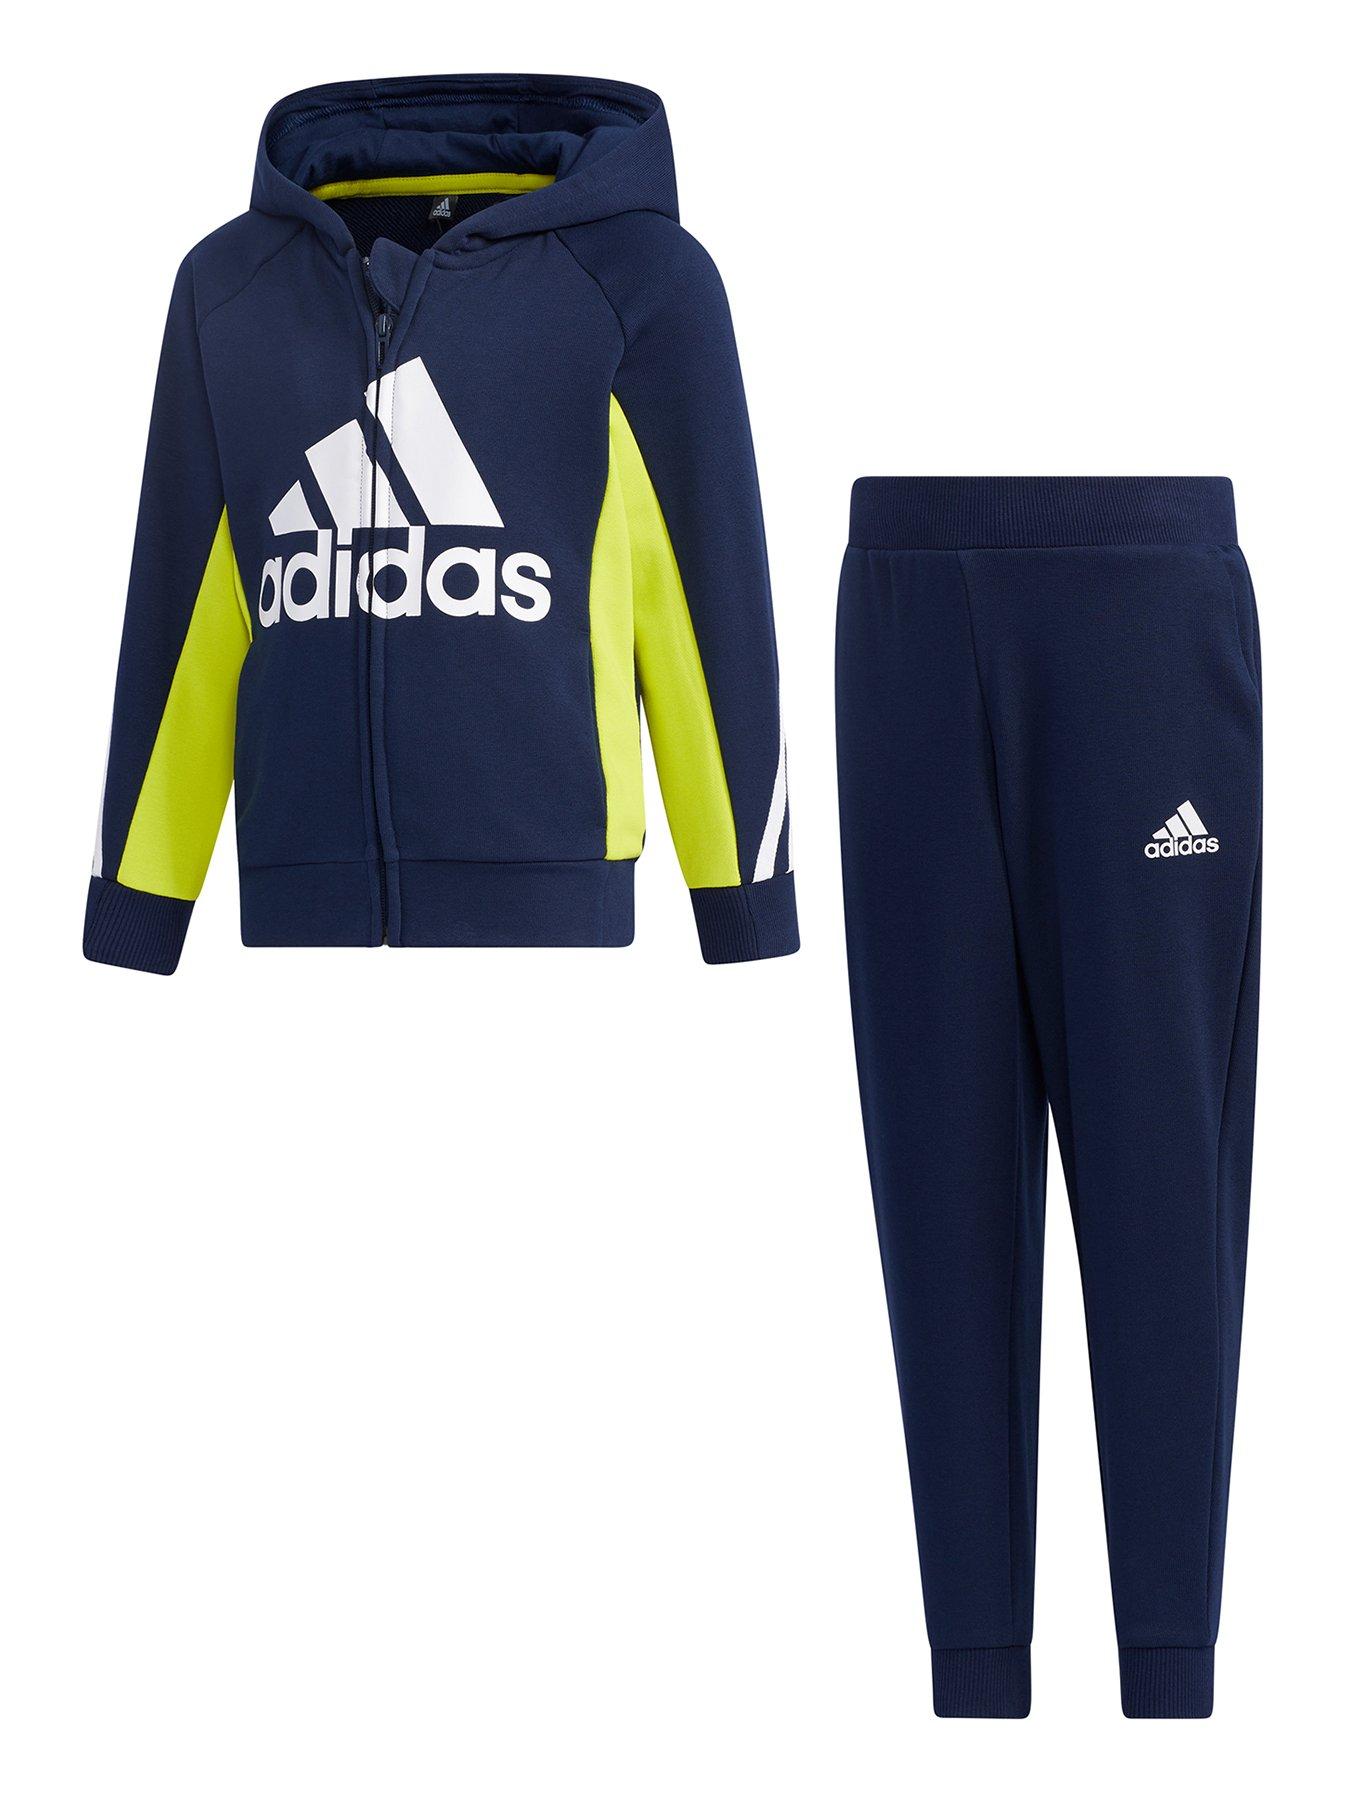 adidas sportswear uk